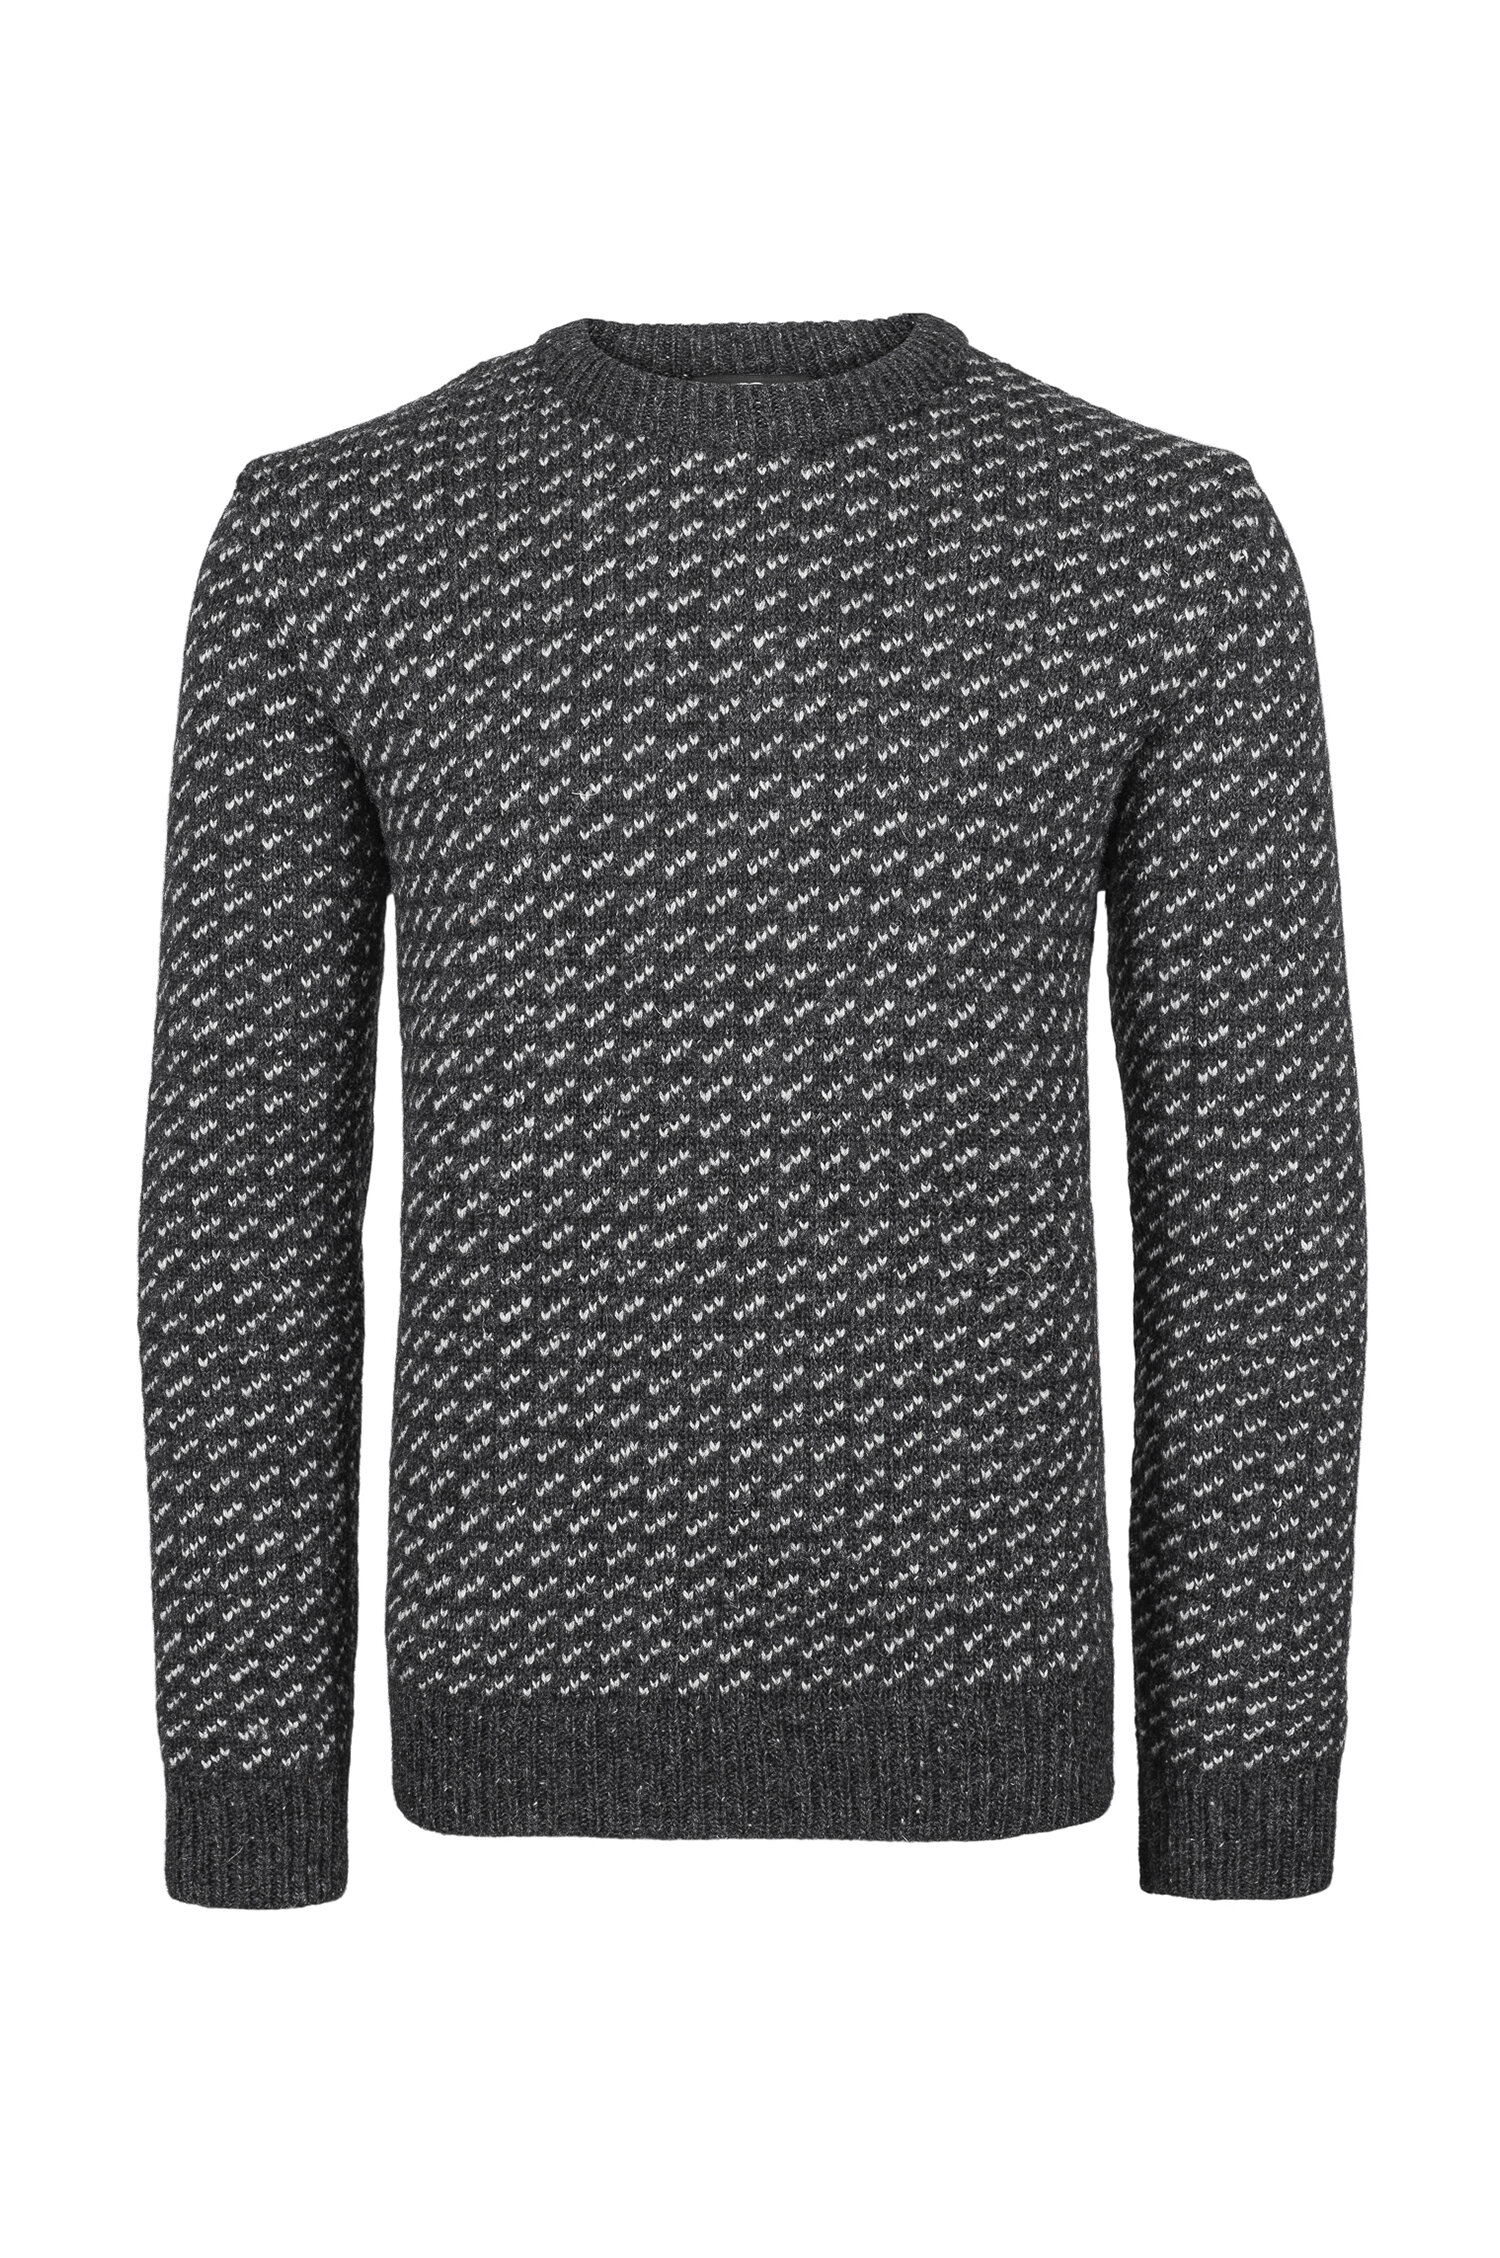 Norlender Knitwear — Classical Norwegian Fisherman Sweater